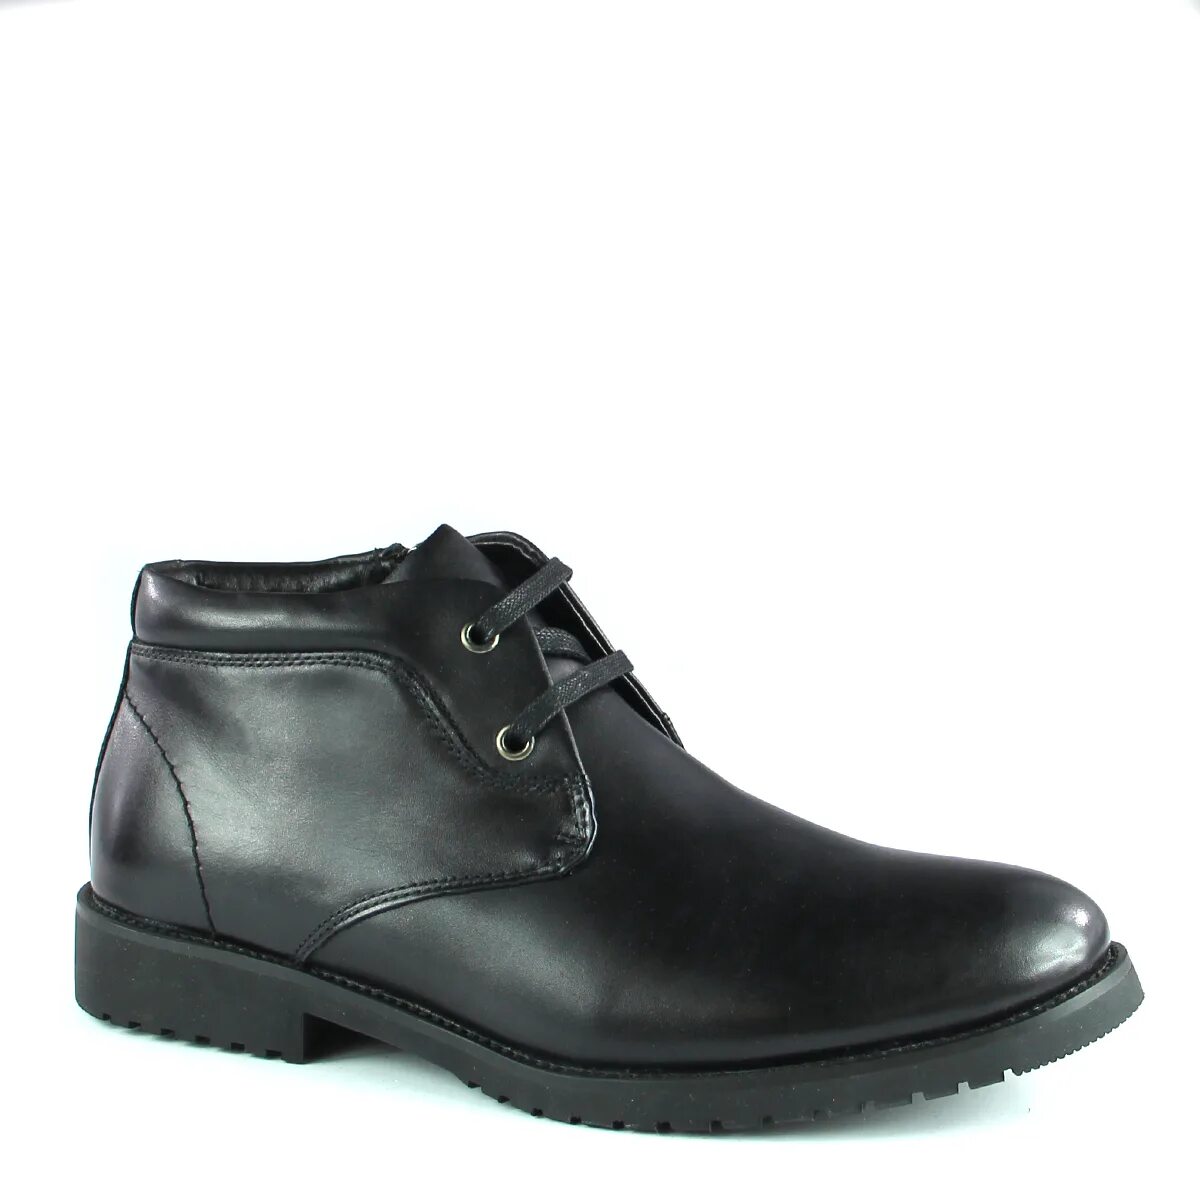 Ботинки DNLP Legend мужские. TG collection обувь мужская GK 7111012 NVY. Ботинки Palladium мужские. Ботинки мужские 44 размер. Купить ботинки мужские 44